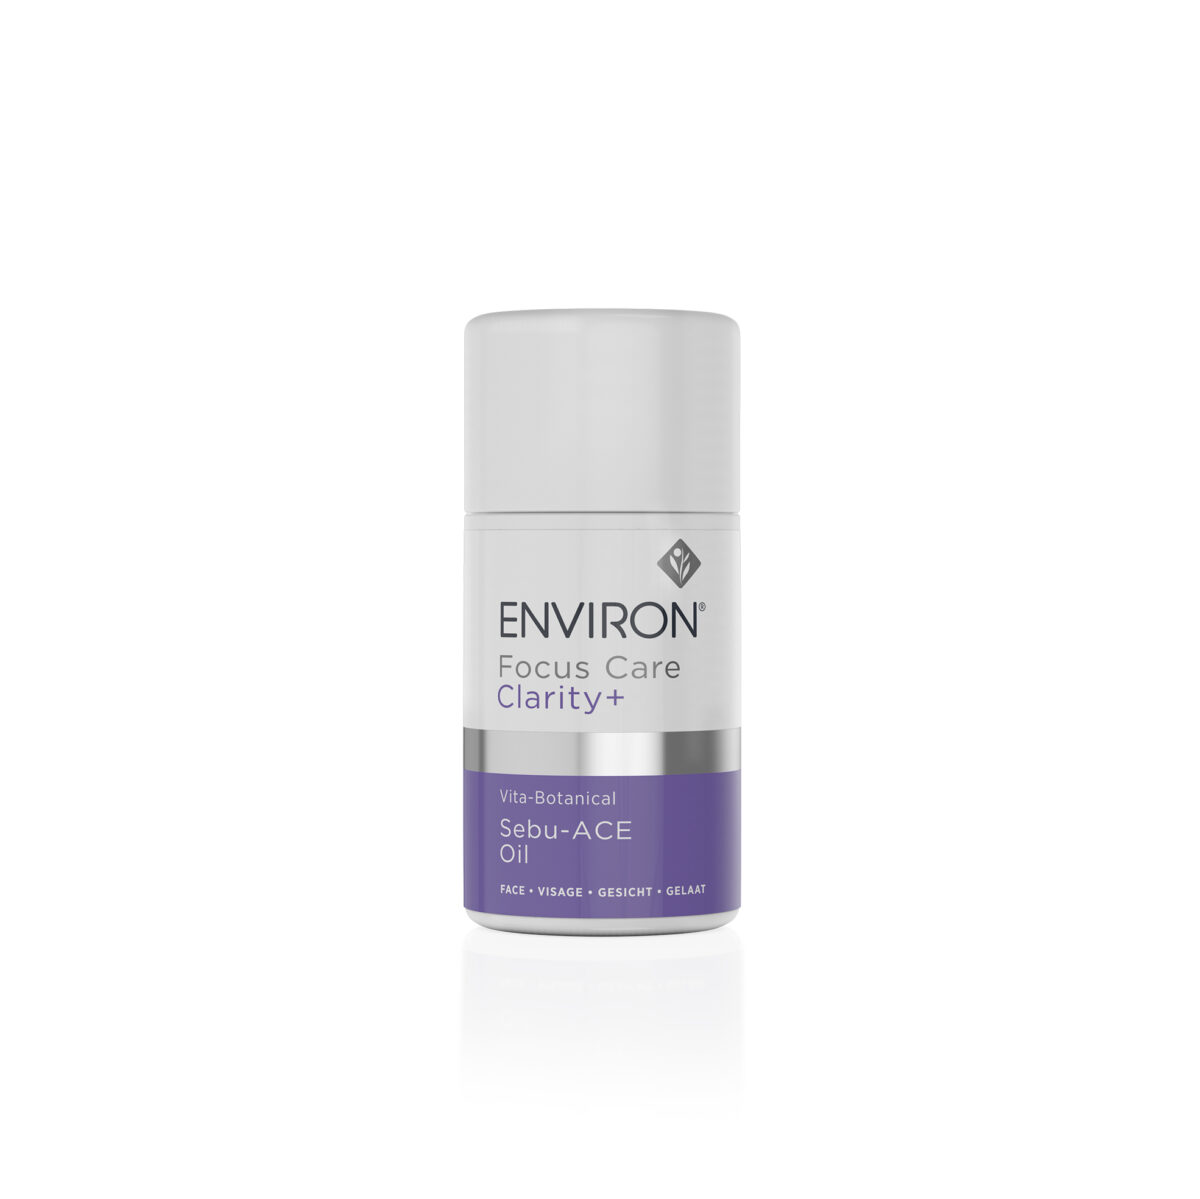 Environ Skin Care Products Sebu-ACE Oil